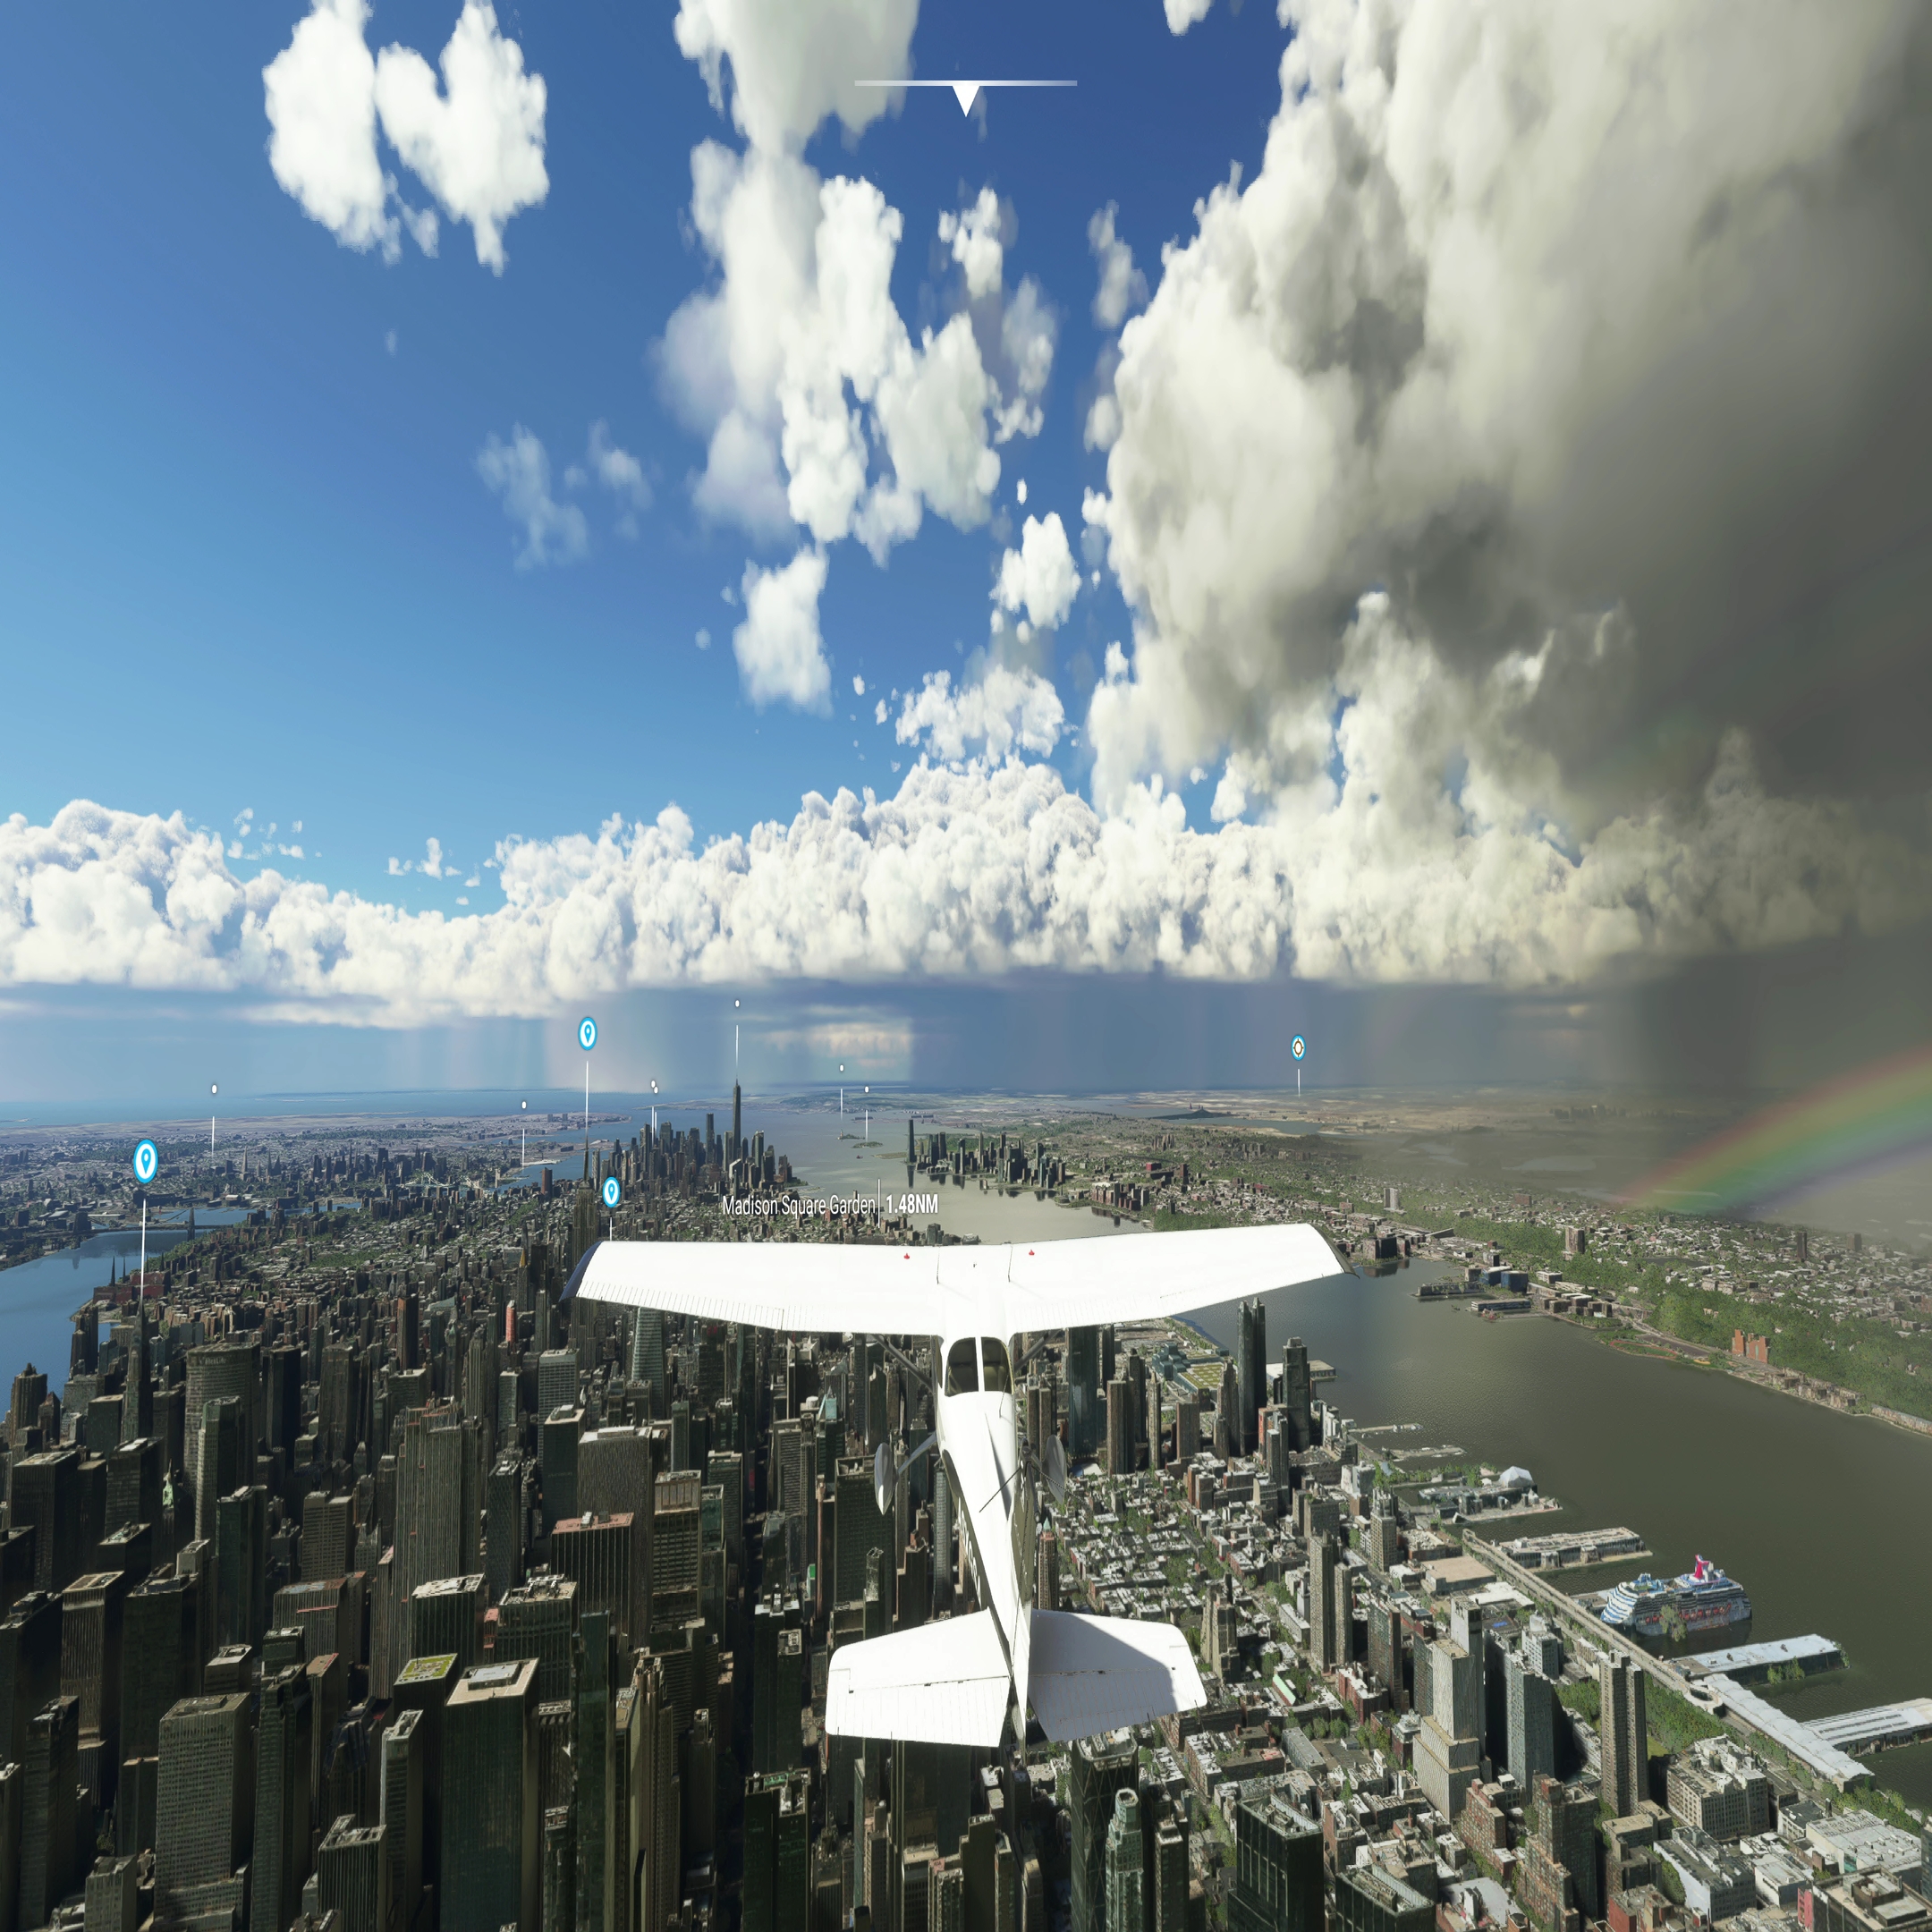 Microsoft Flight Simulator tech review: a brilliant port to Xbox Series X/S